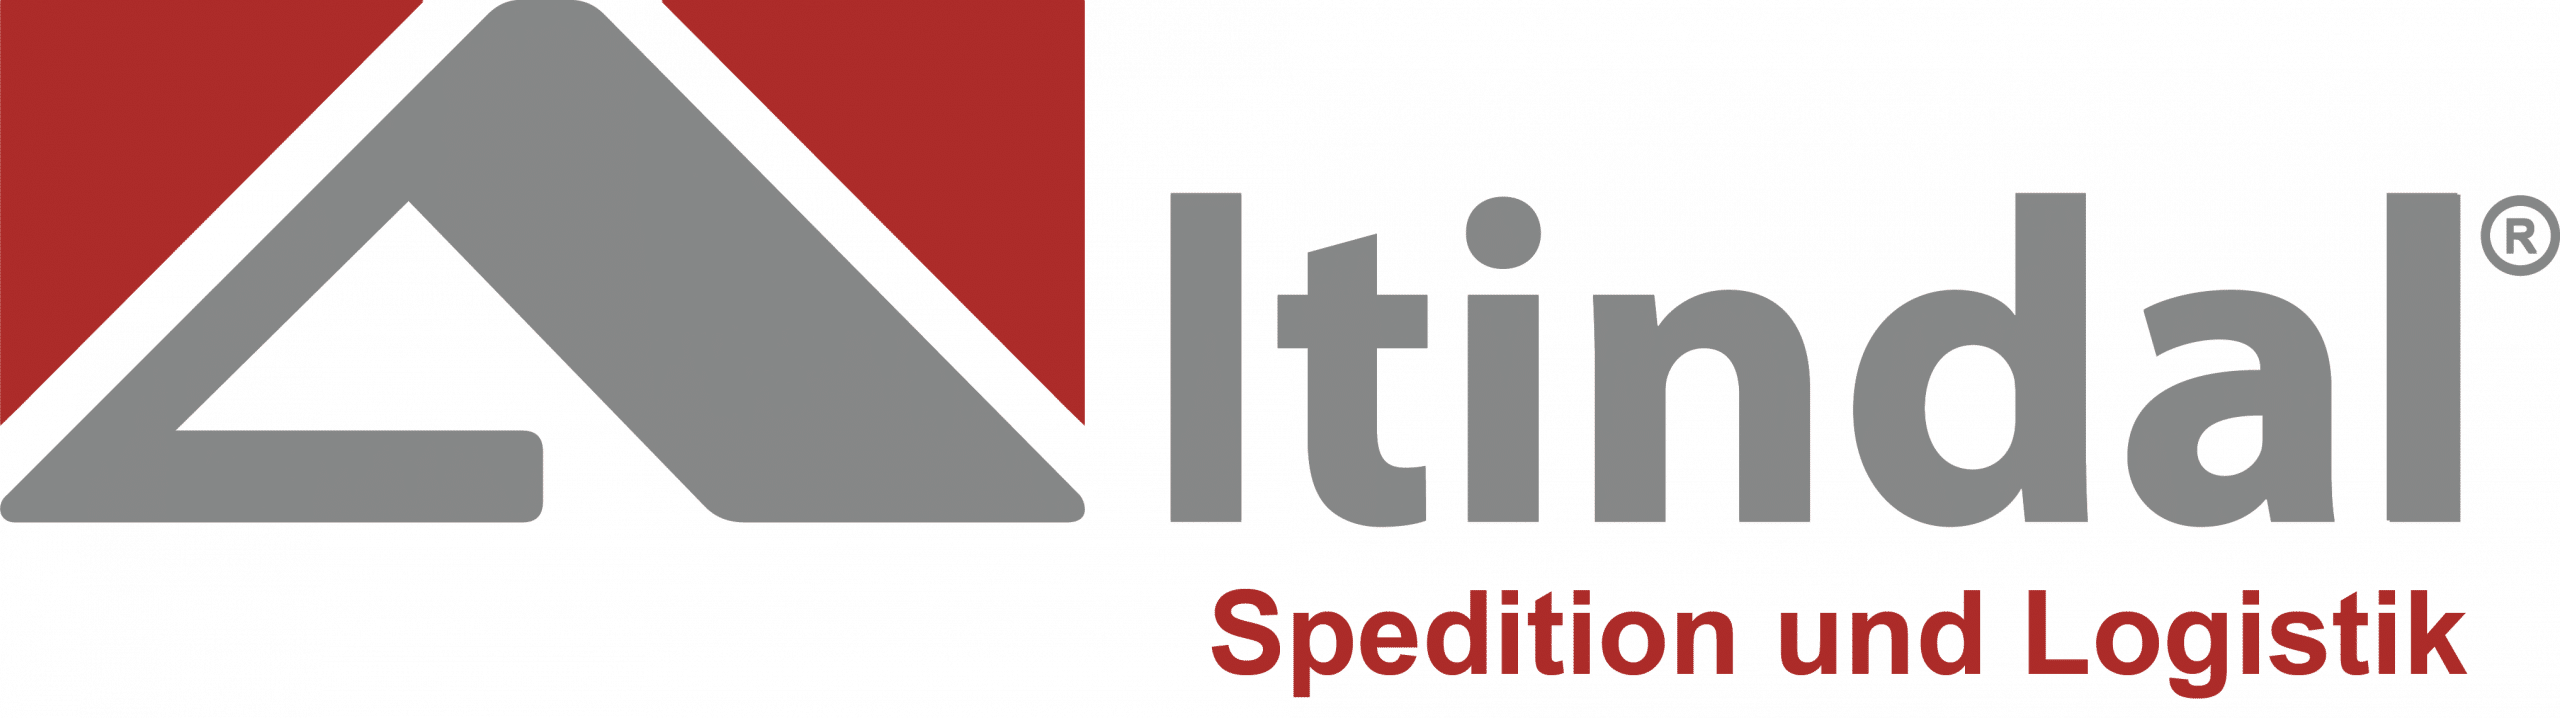 Altindal Spedition und Logistik - Logo